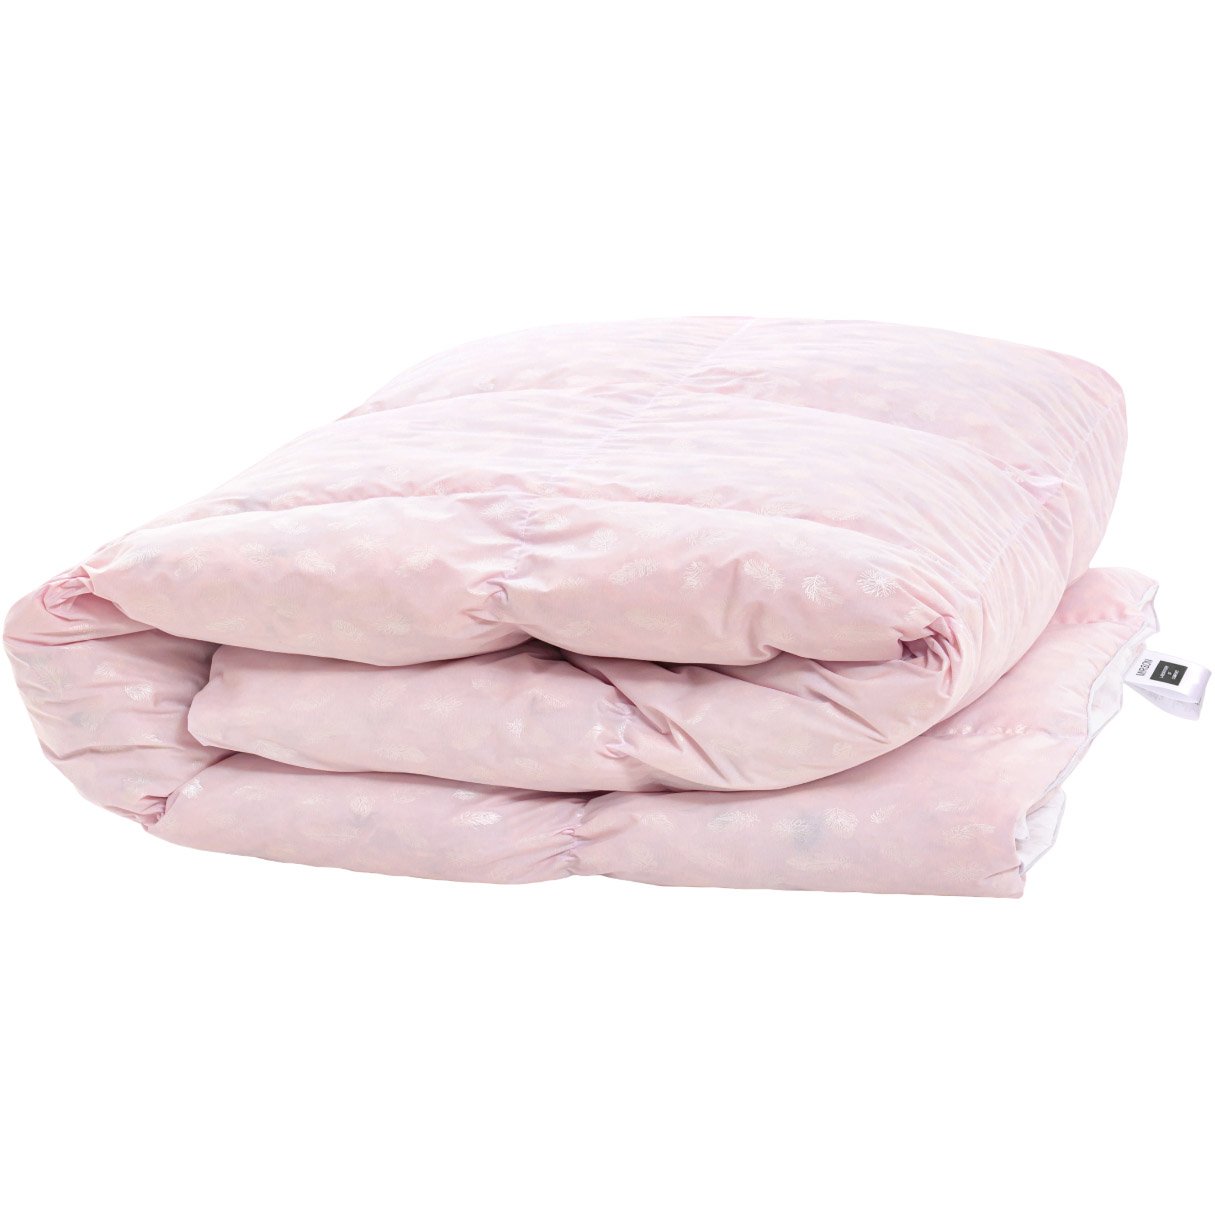 Одеяло пуховое MirSon Karmen №1841 Bio-Pink, 70% пух, евростандарт, 220x200, розовое (2200003013696) - фото 1